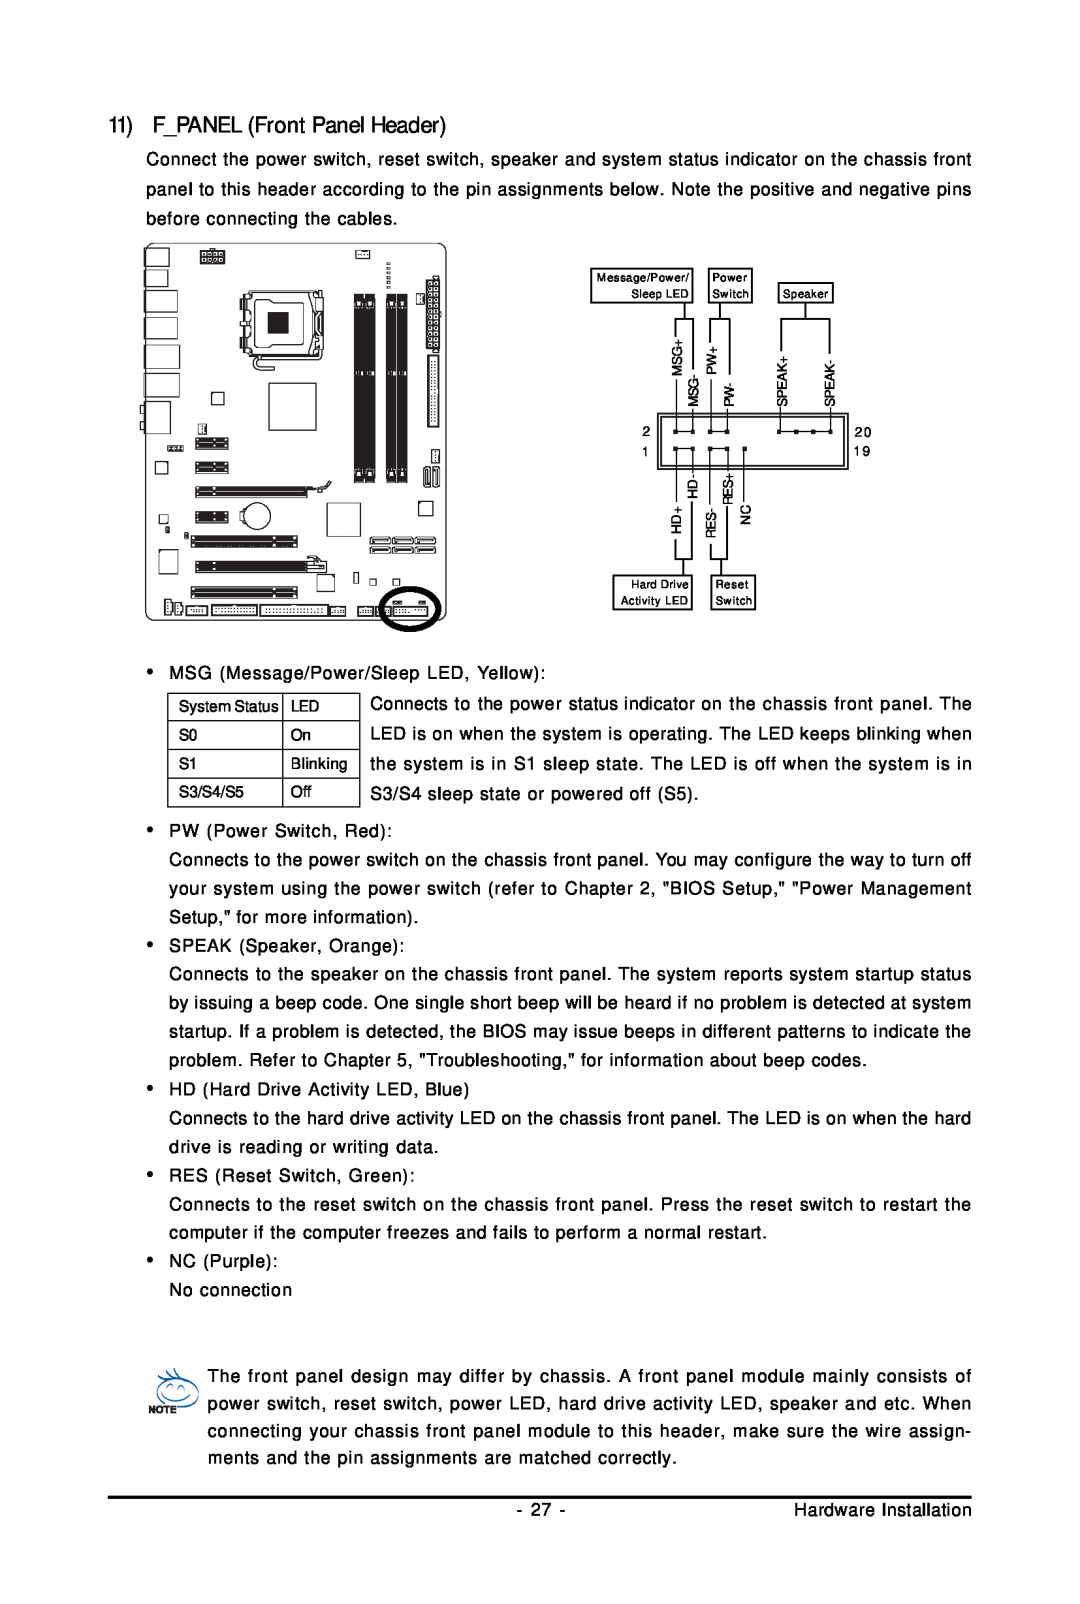 Gigabyte GA-EP45-UD3P user manual FPANEL Front Panel Header 